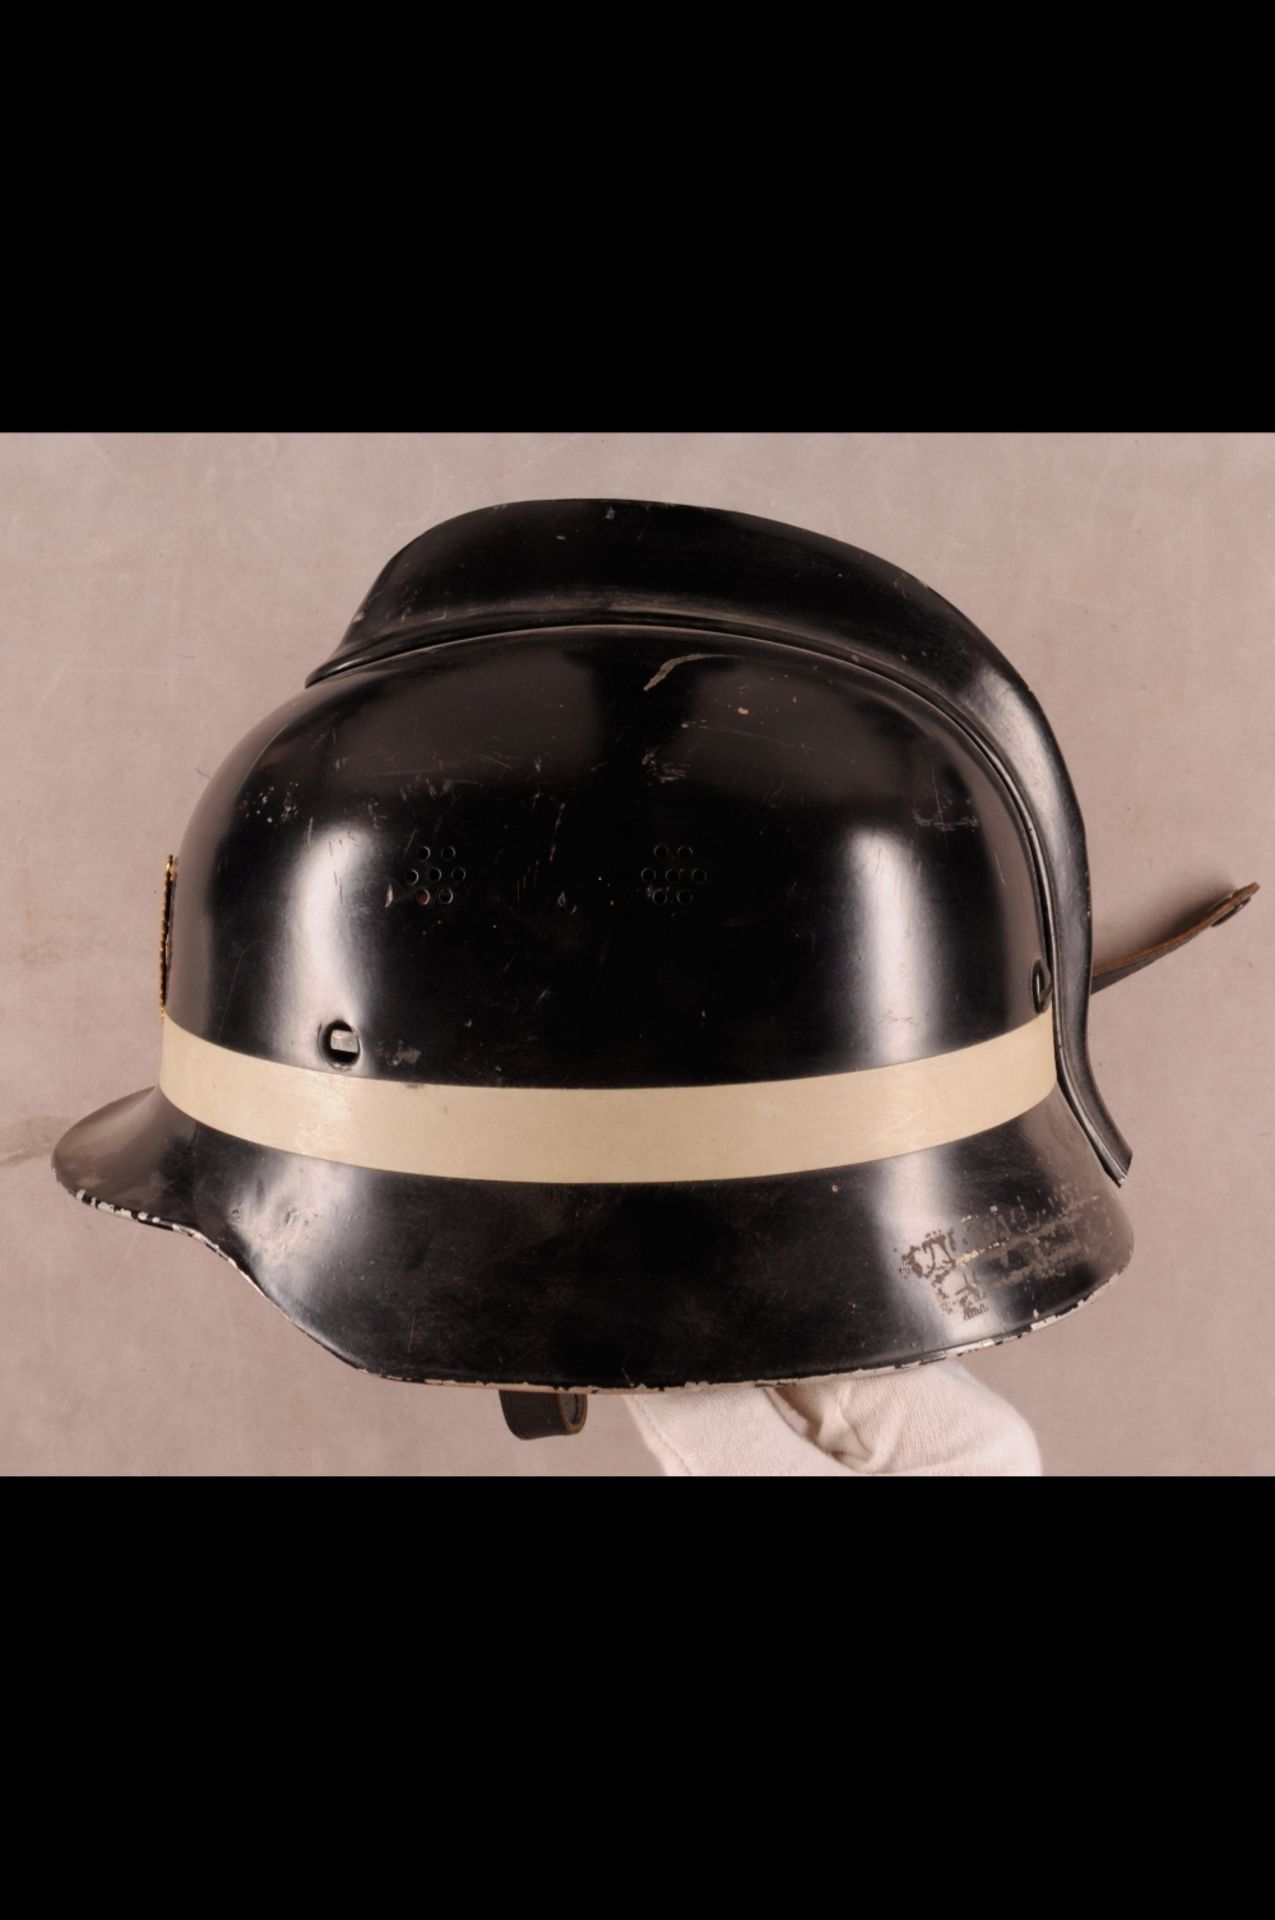 Fire-brigade / Police, estate with 13 x peaked cap, 4 x stem cap, 5 x helmet, 13 x uniforms / - Image 58 of 118